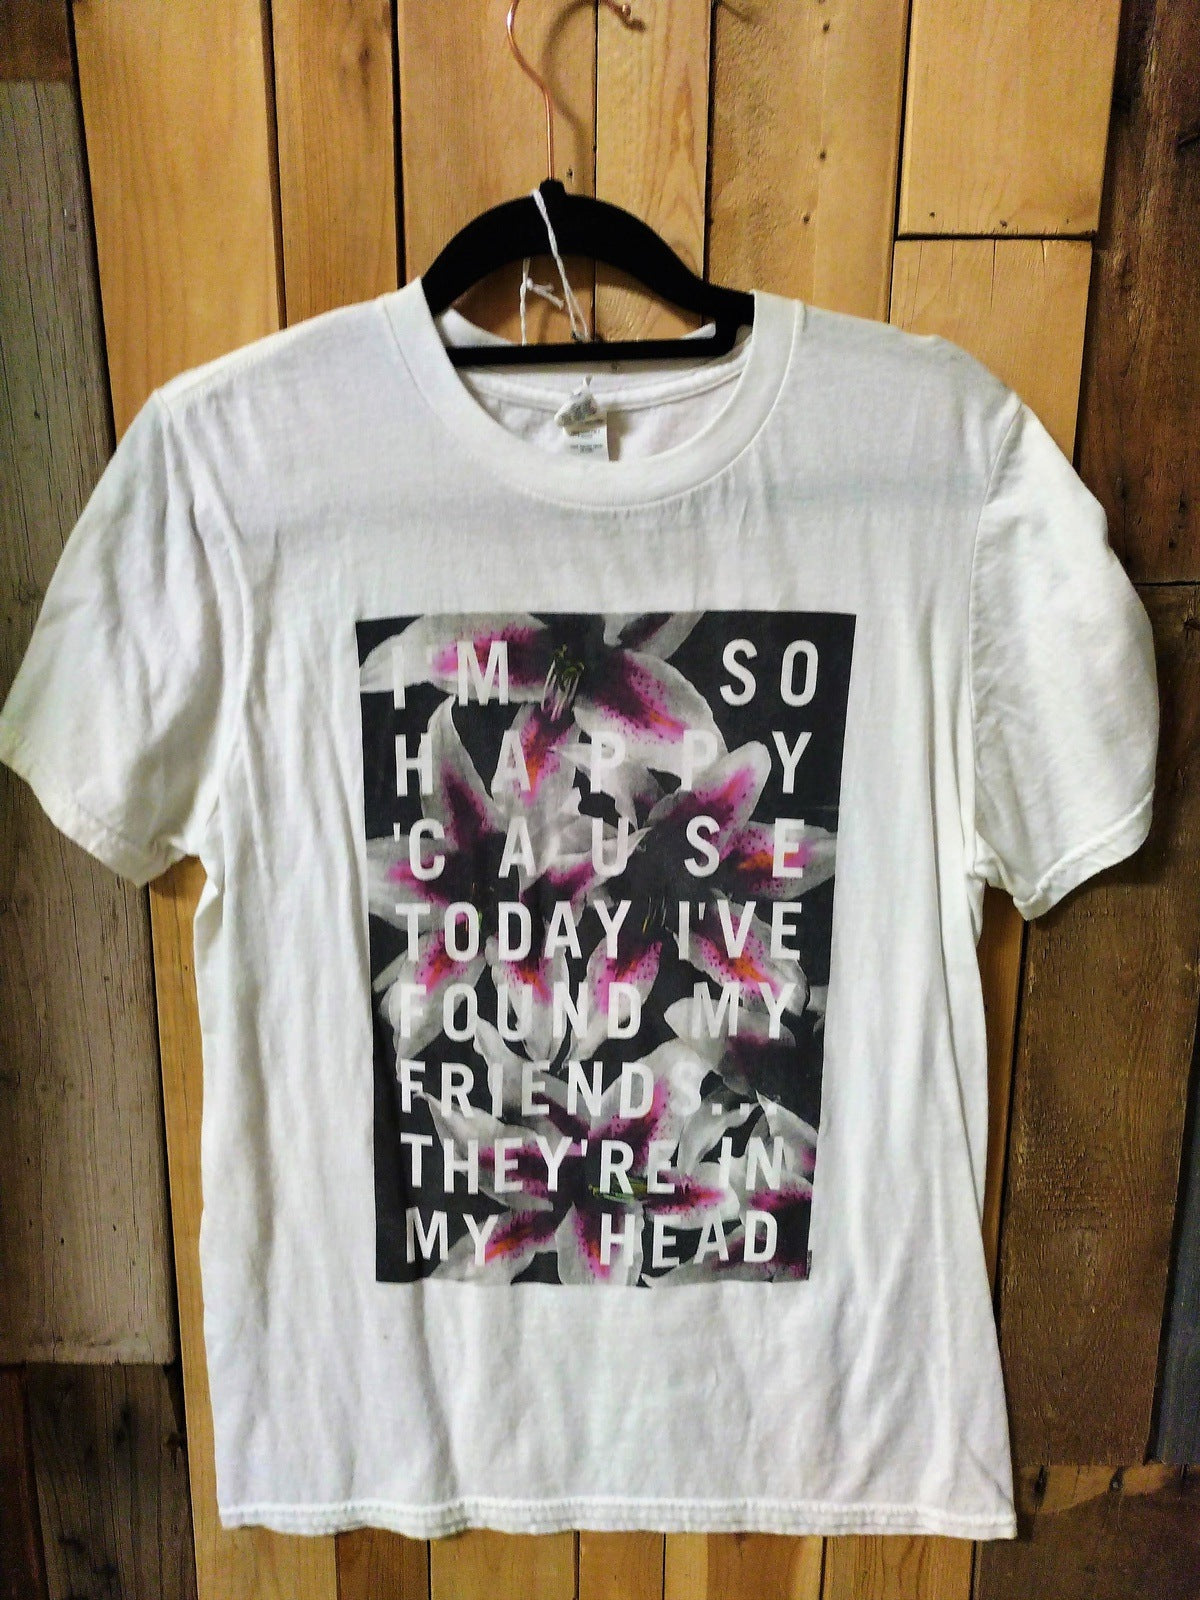 Nirvana Lithium Lyrics Women's T Shirt Size Small